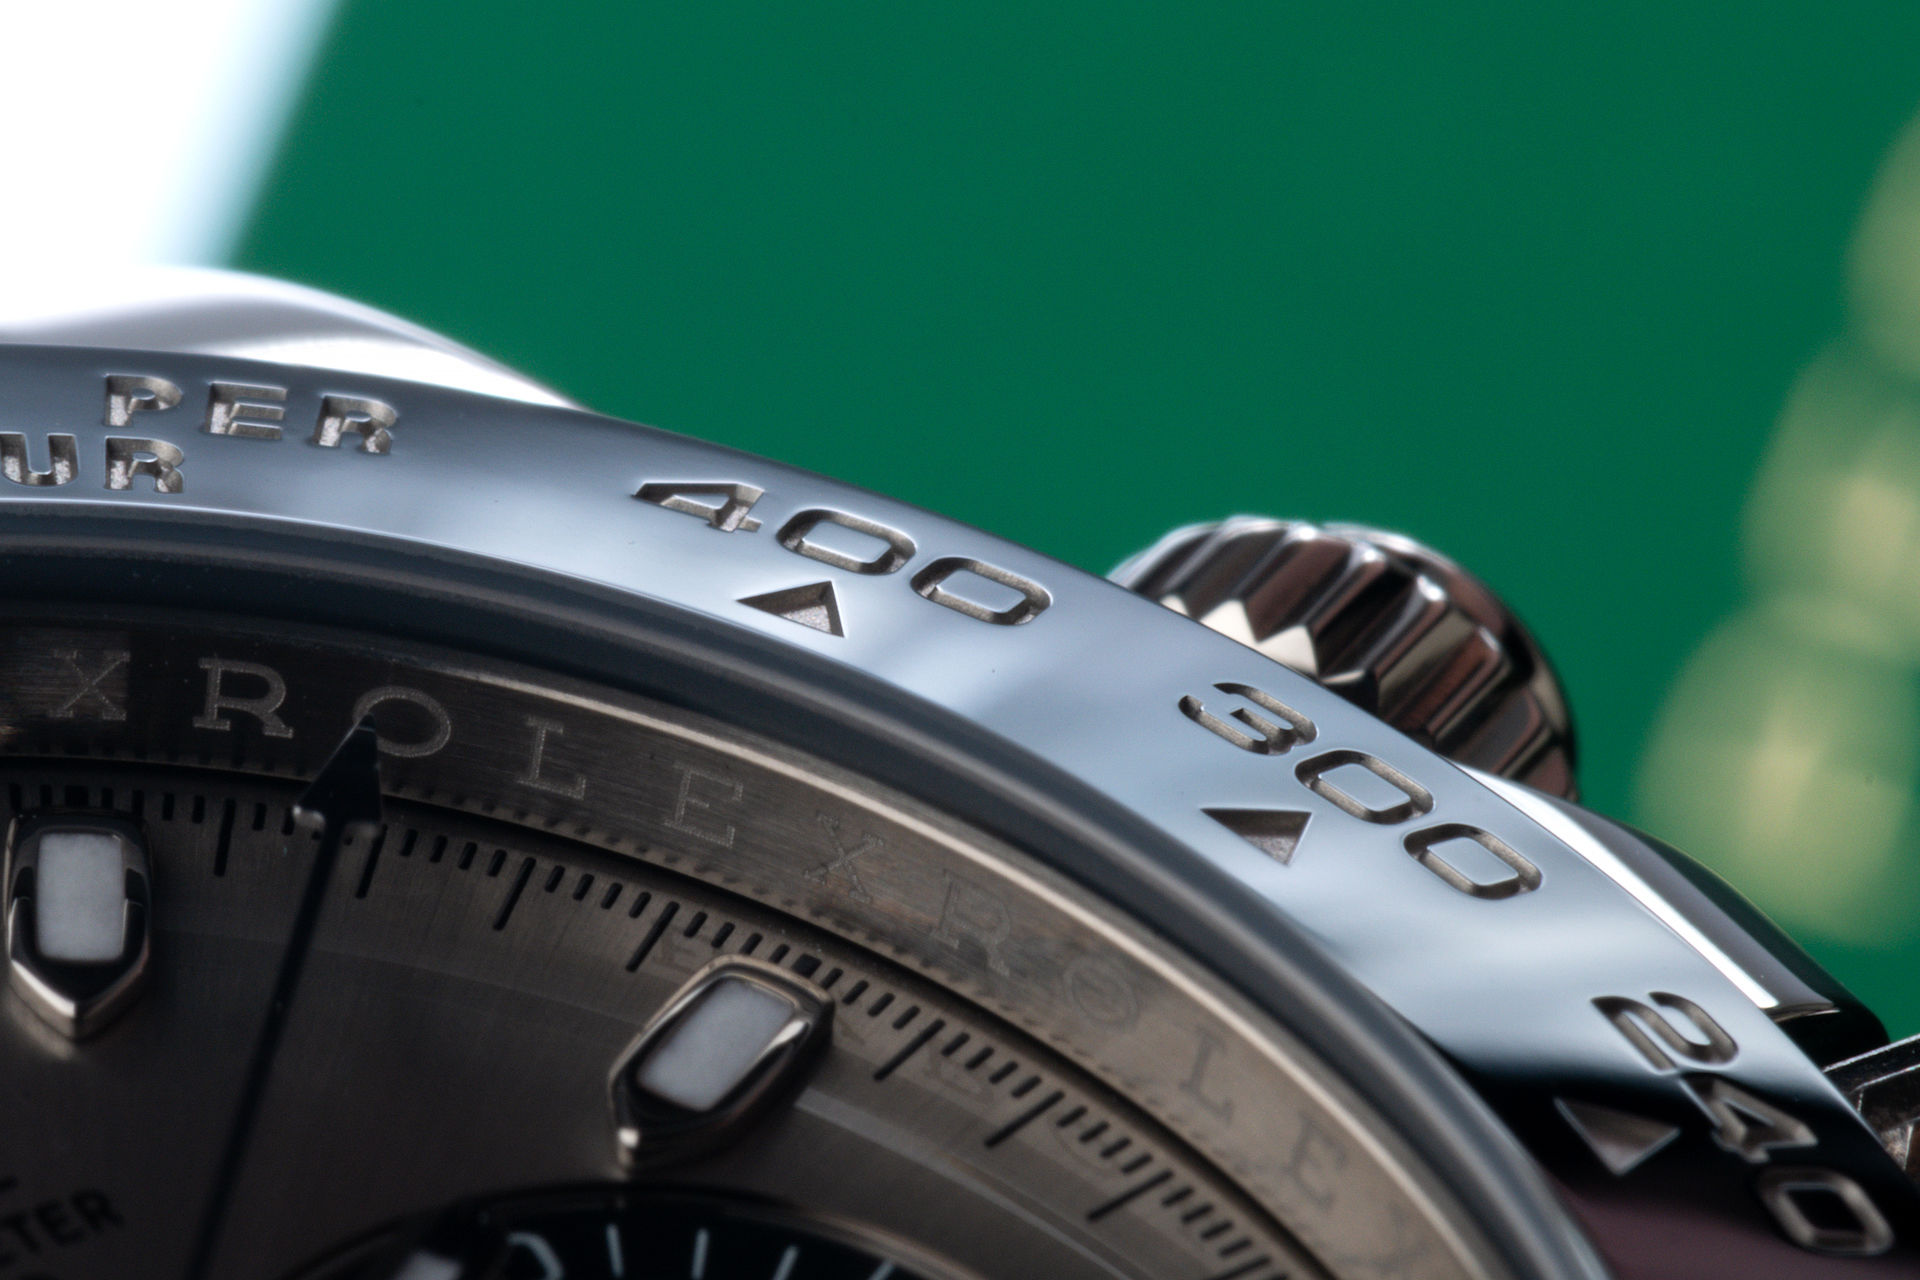 ref 116519LN | Latest Model '5 Year Warranty' | Rolex Cosmograph Daytona